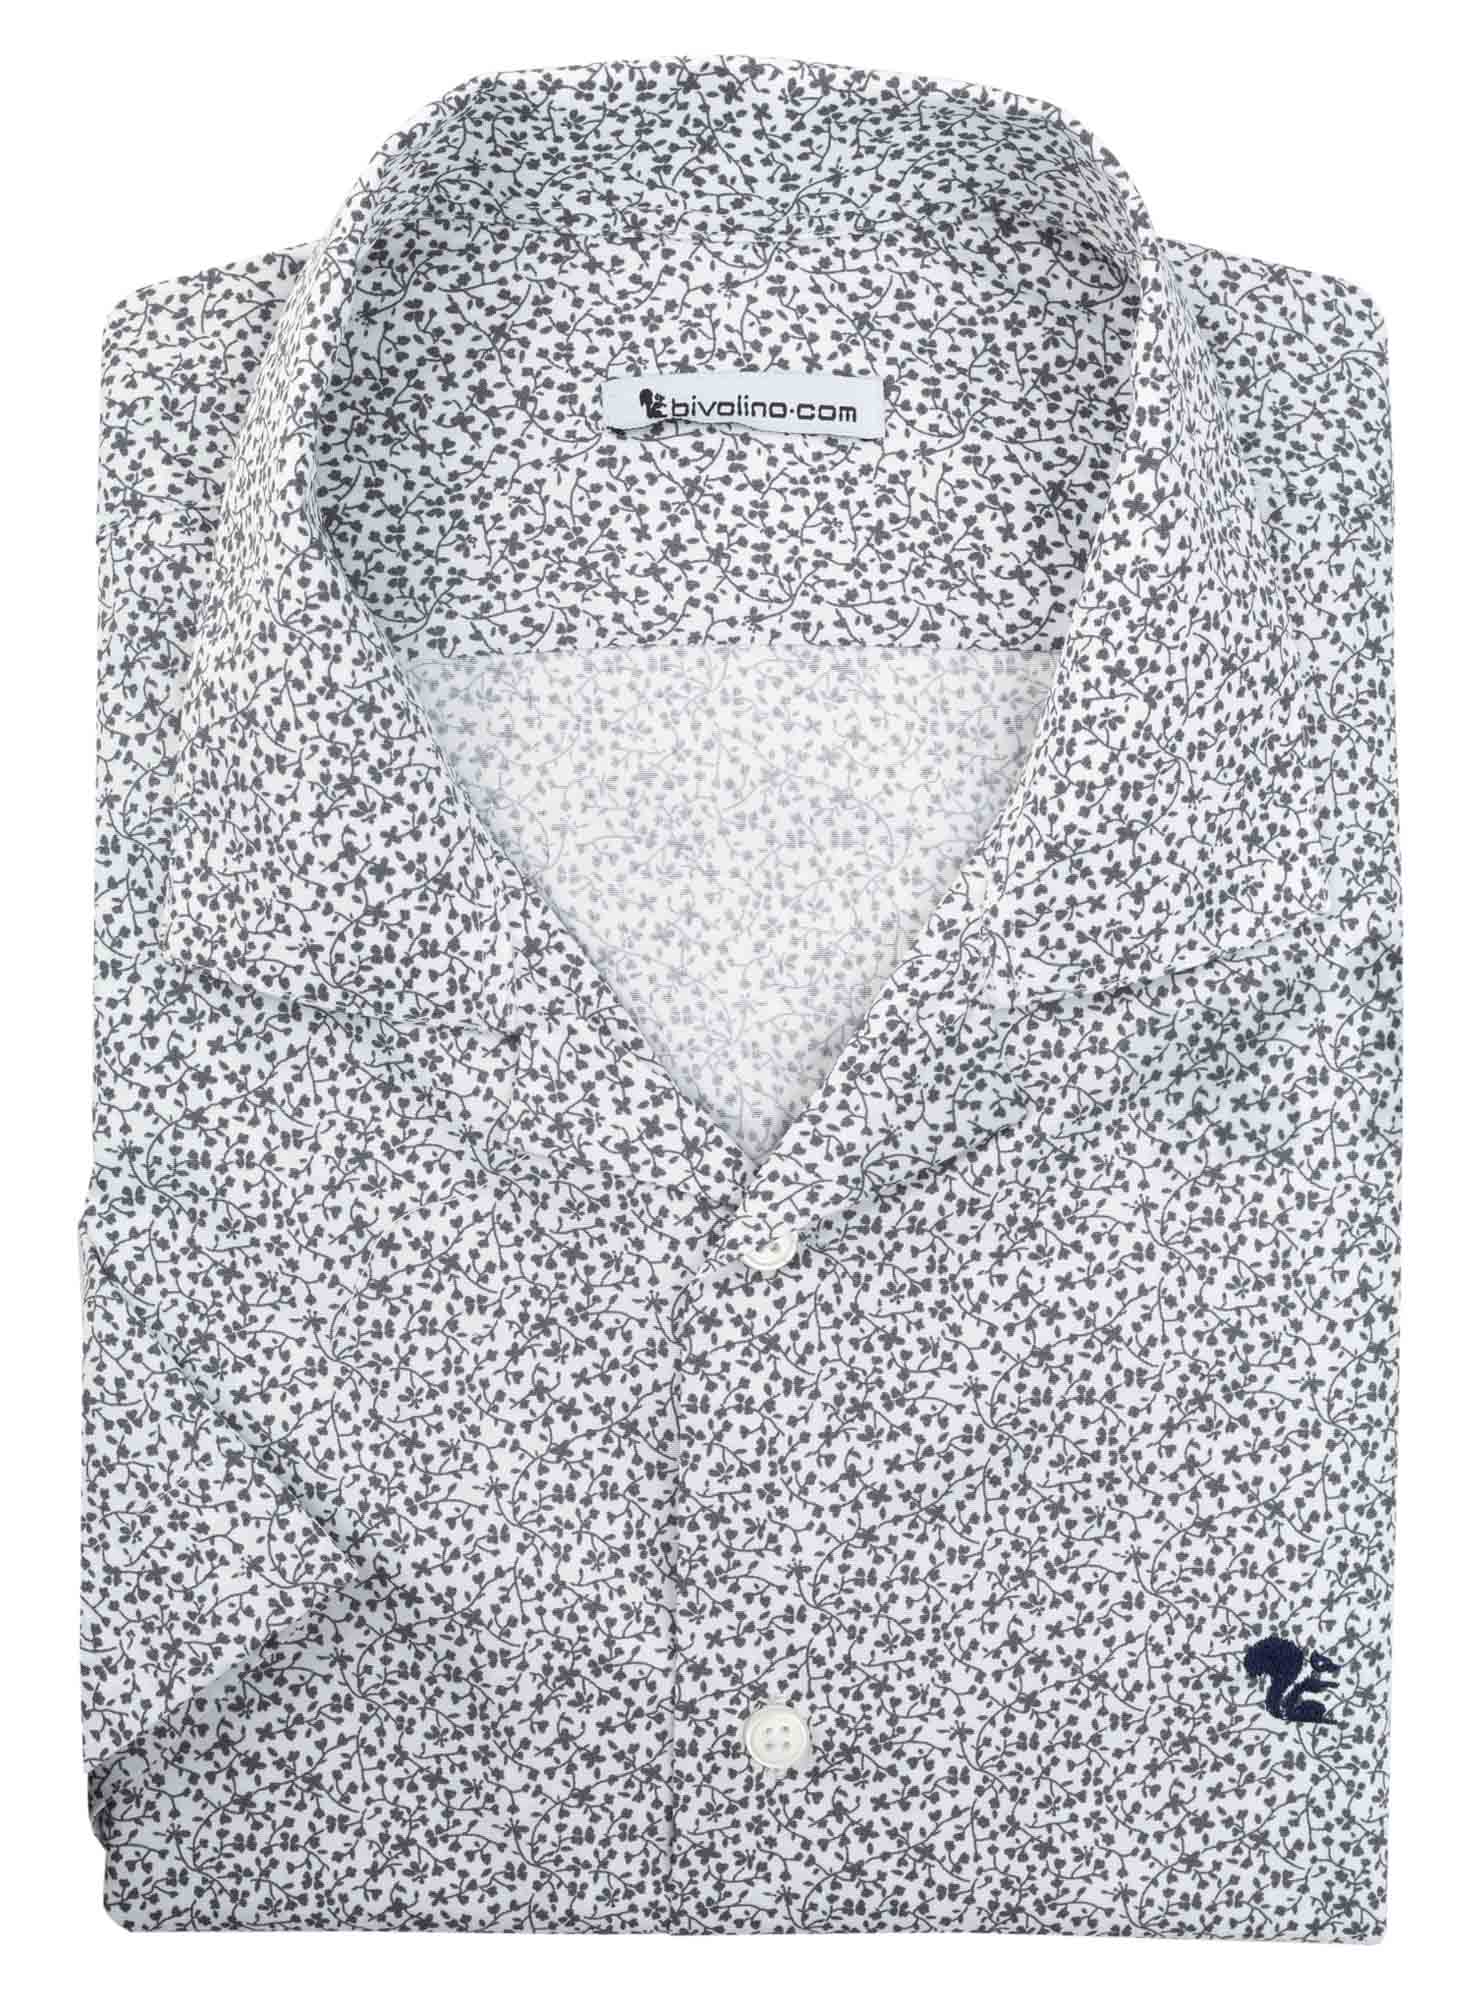 LIVORNO - estampado de microdibujos de millefleurs de algodón azul marino camisa de hombre - MANIO 2